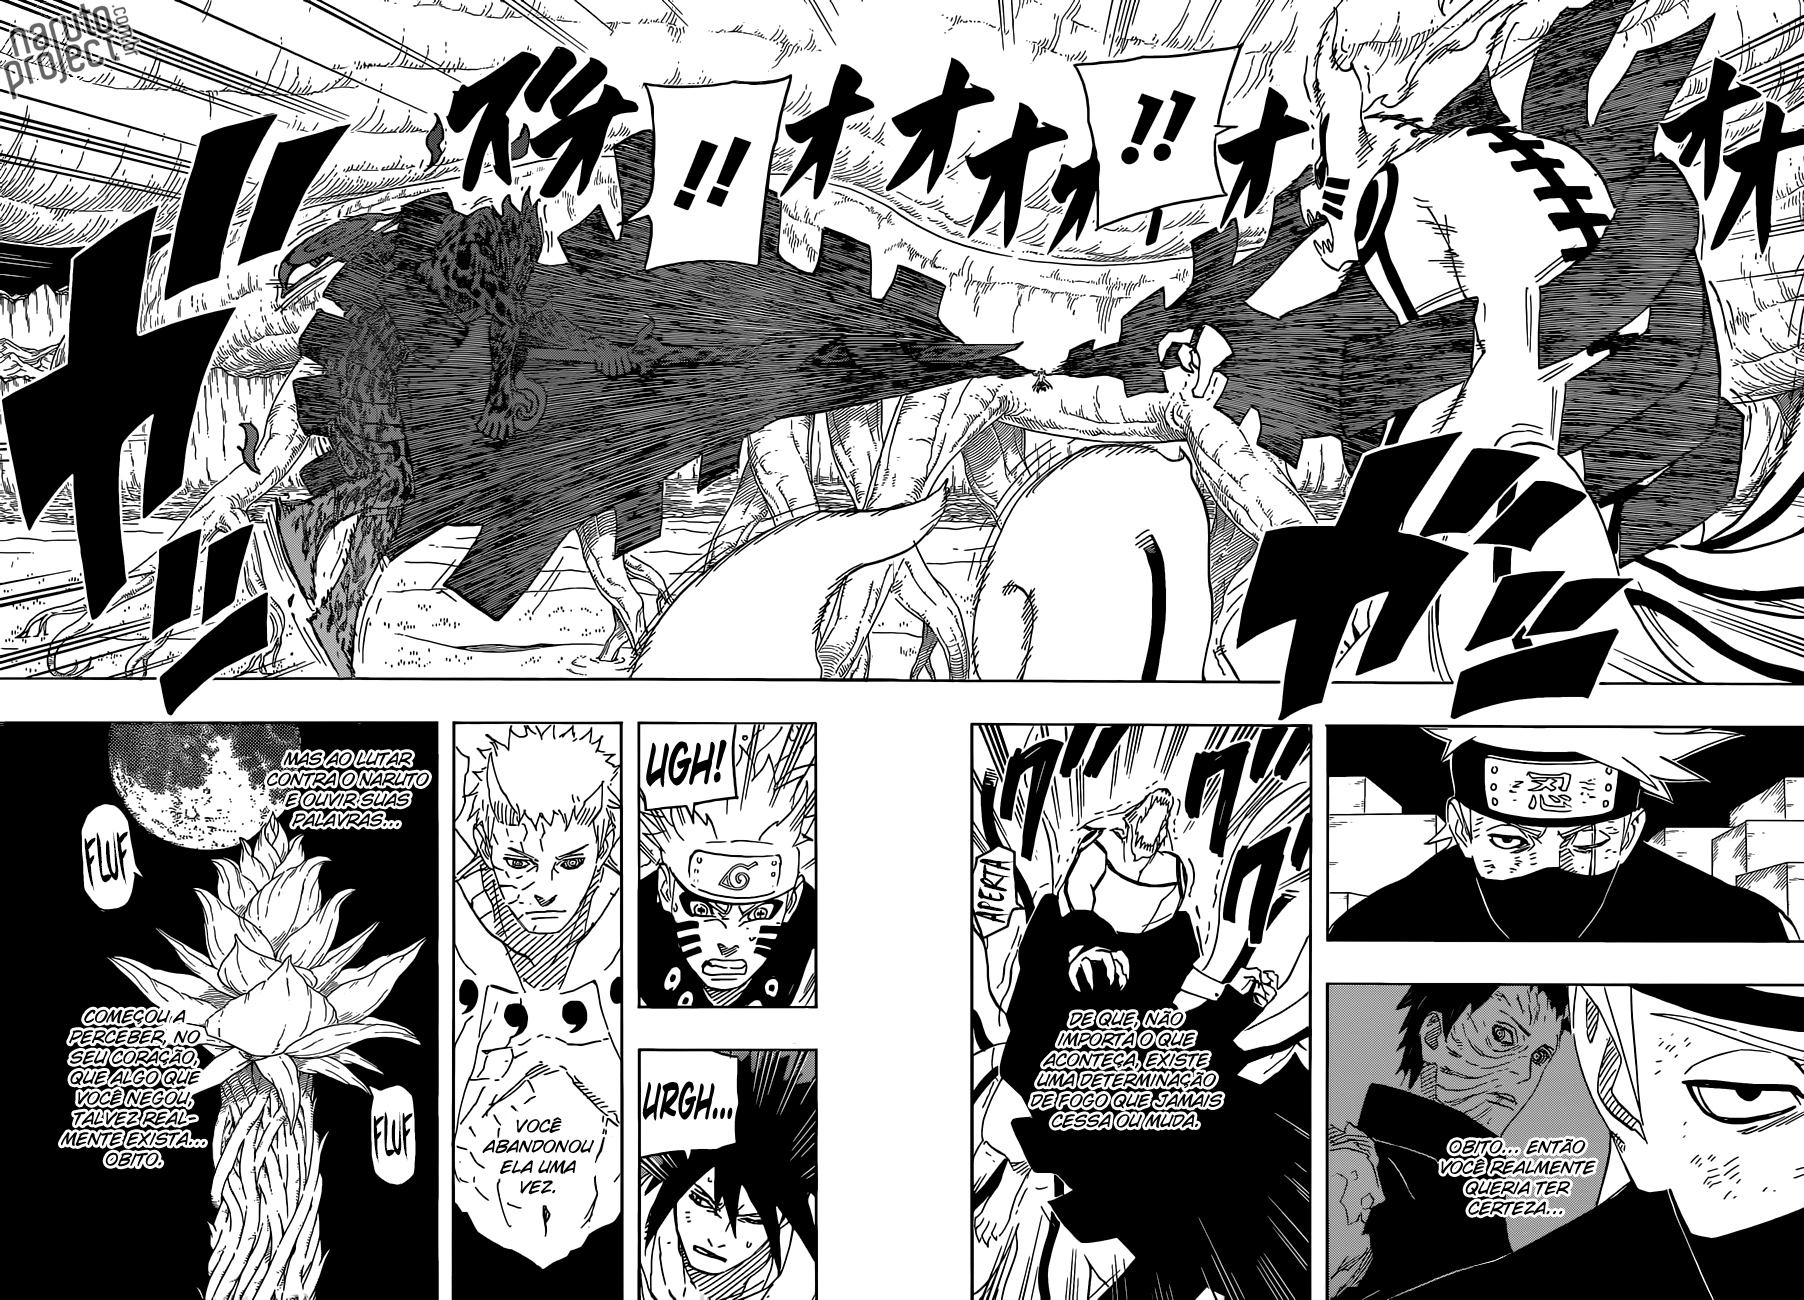 Naruto KM1(Guerra) vs Sasuke FMS(Guerra) - Página 2 10